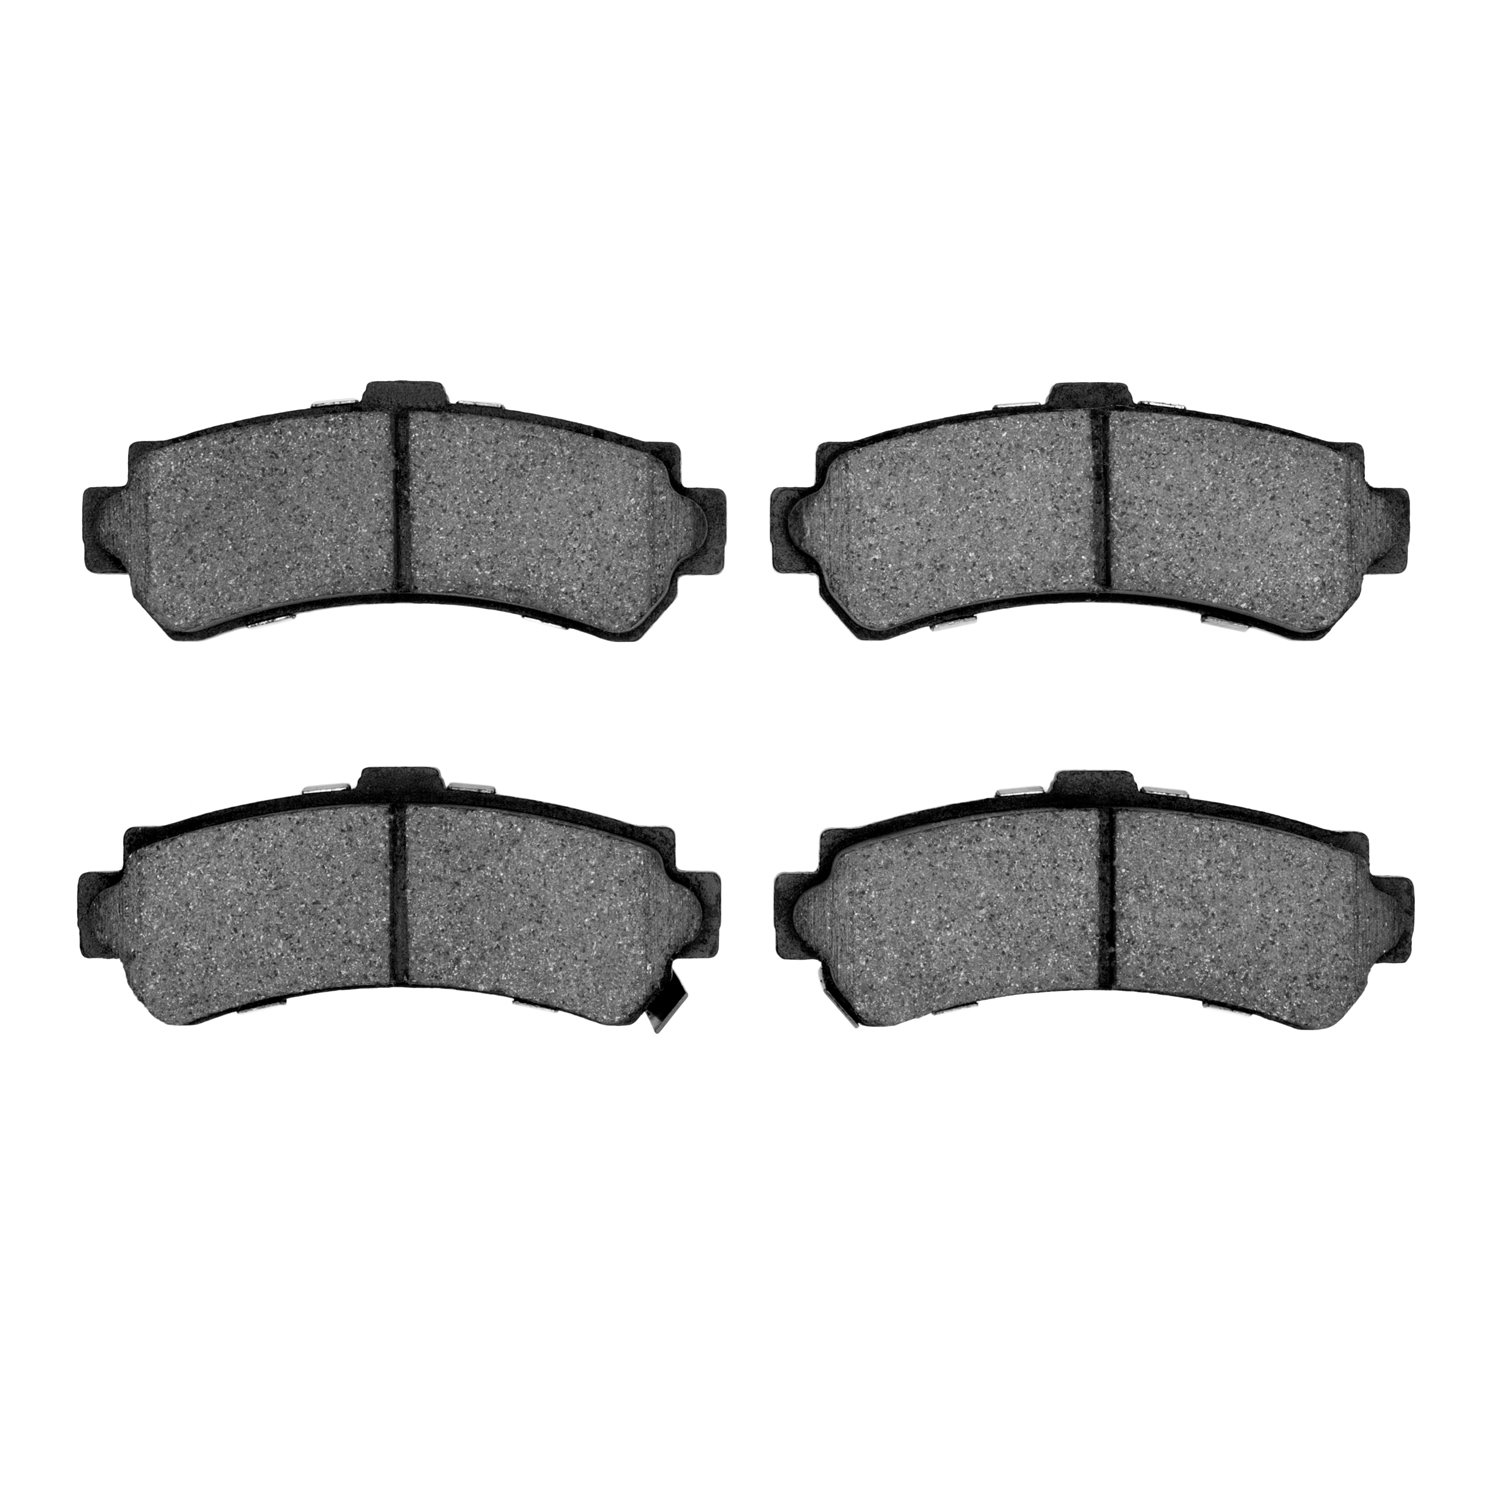 1310-0669-00 3000-Series Ceramic Brake Pads, 1995-2000 Infiniti/Nissan, Position: Rear